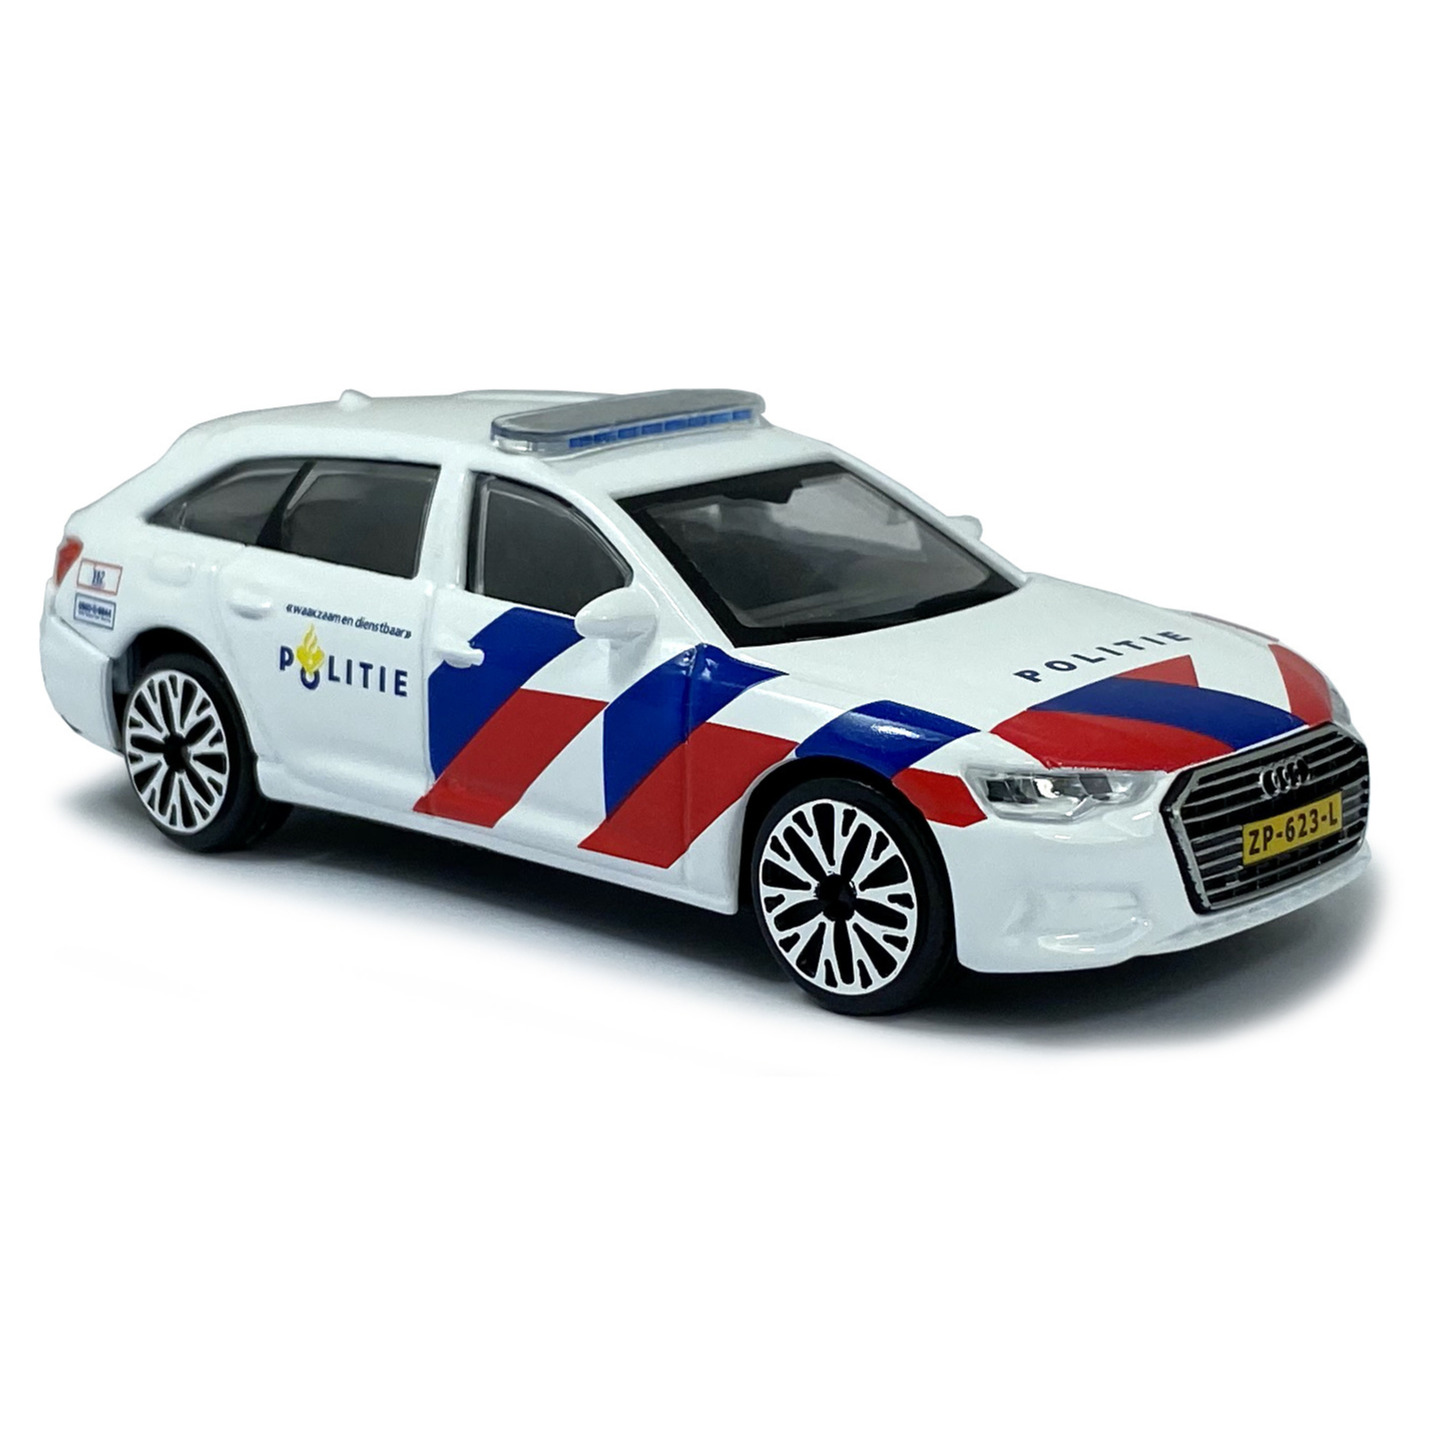 Modelauto Audi A6 Politie Nederland 2019 schaal 1:43-11 x 4 x 3 cm